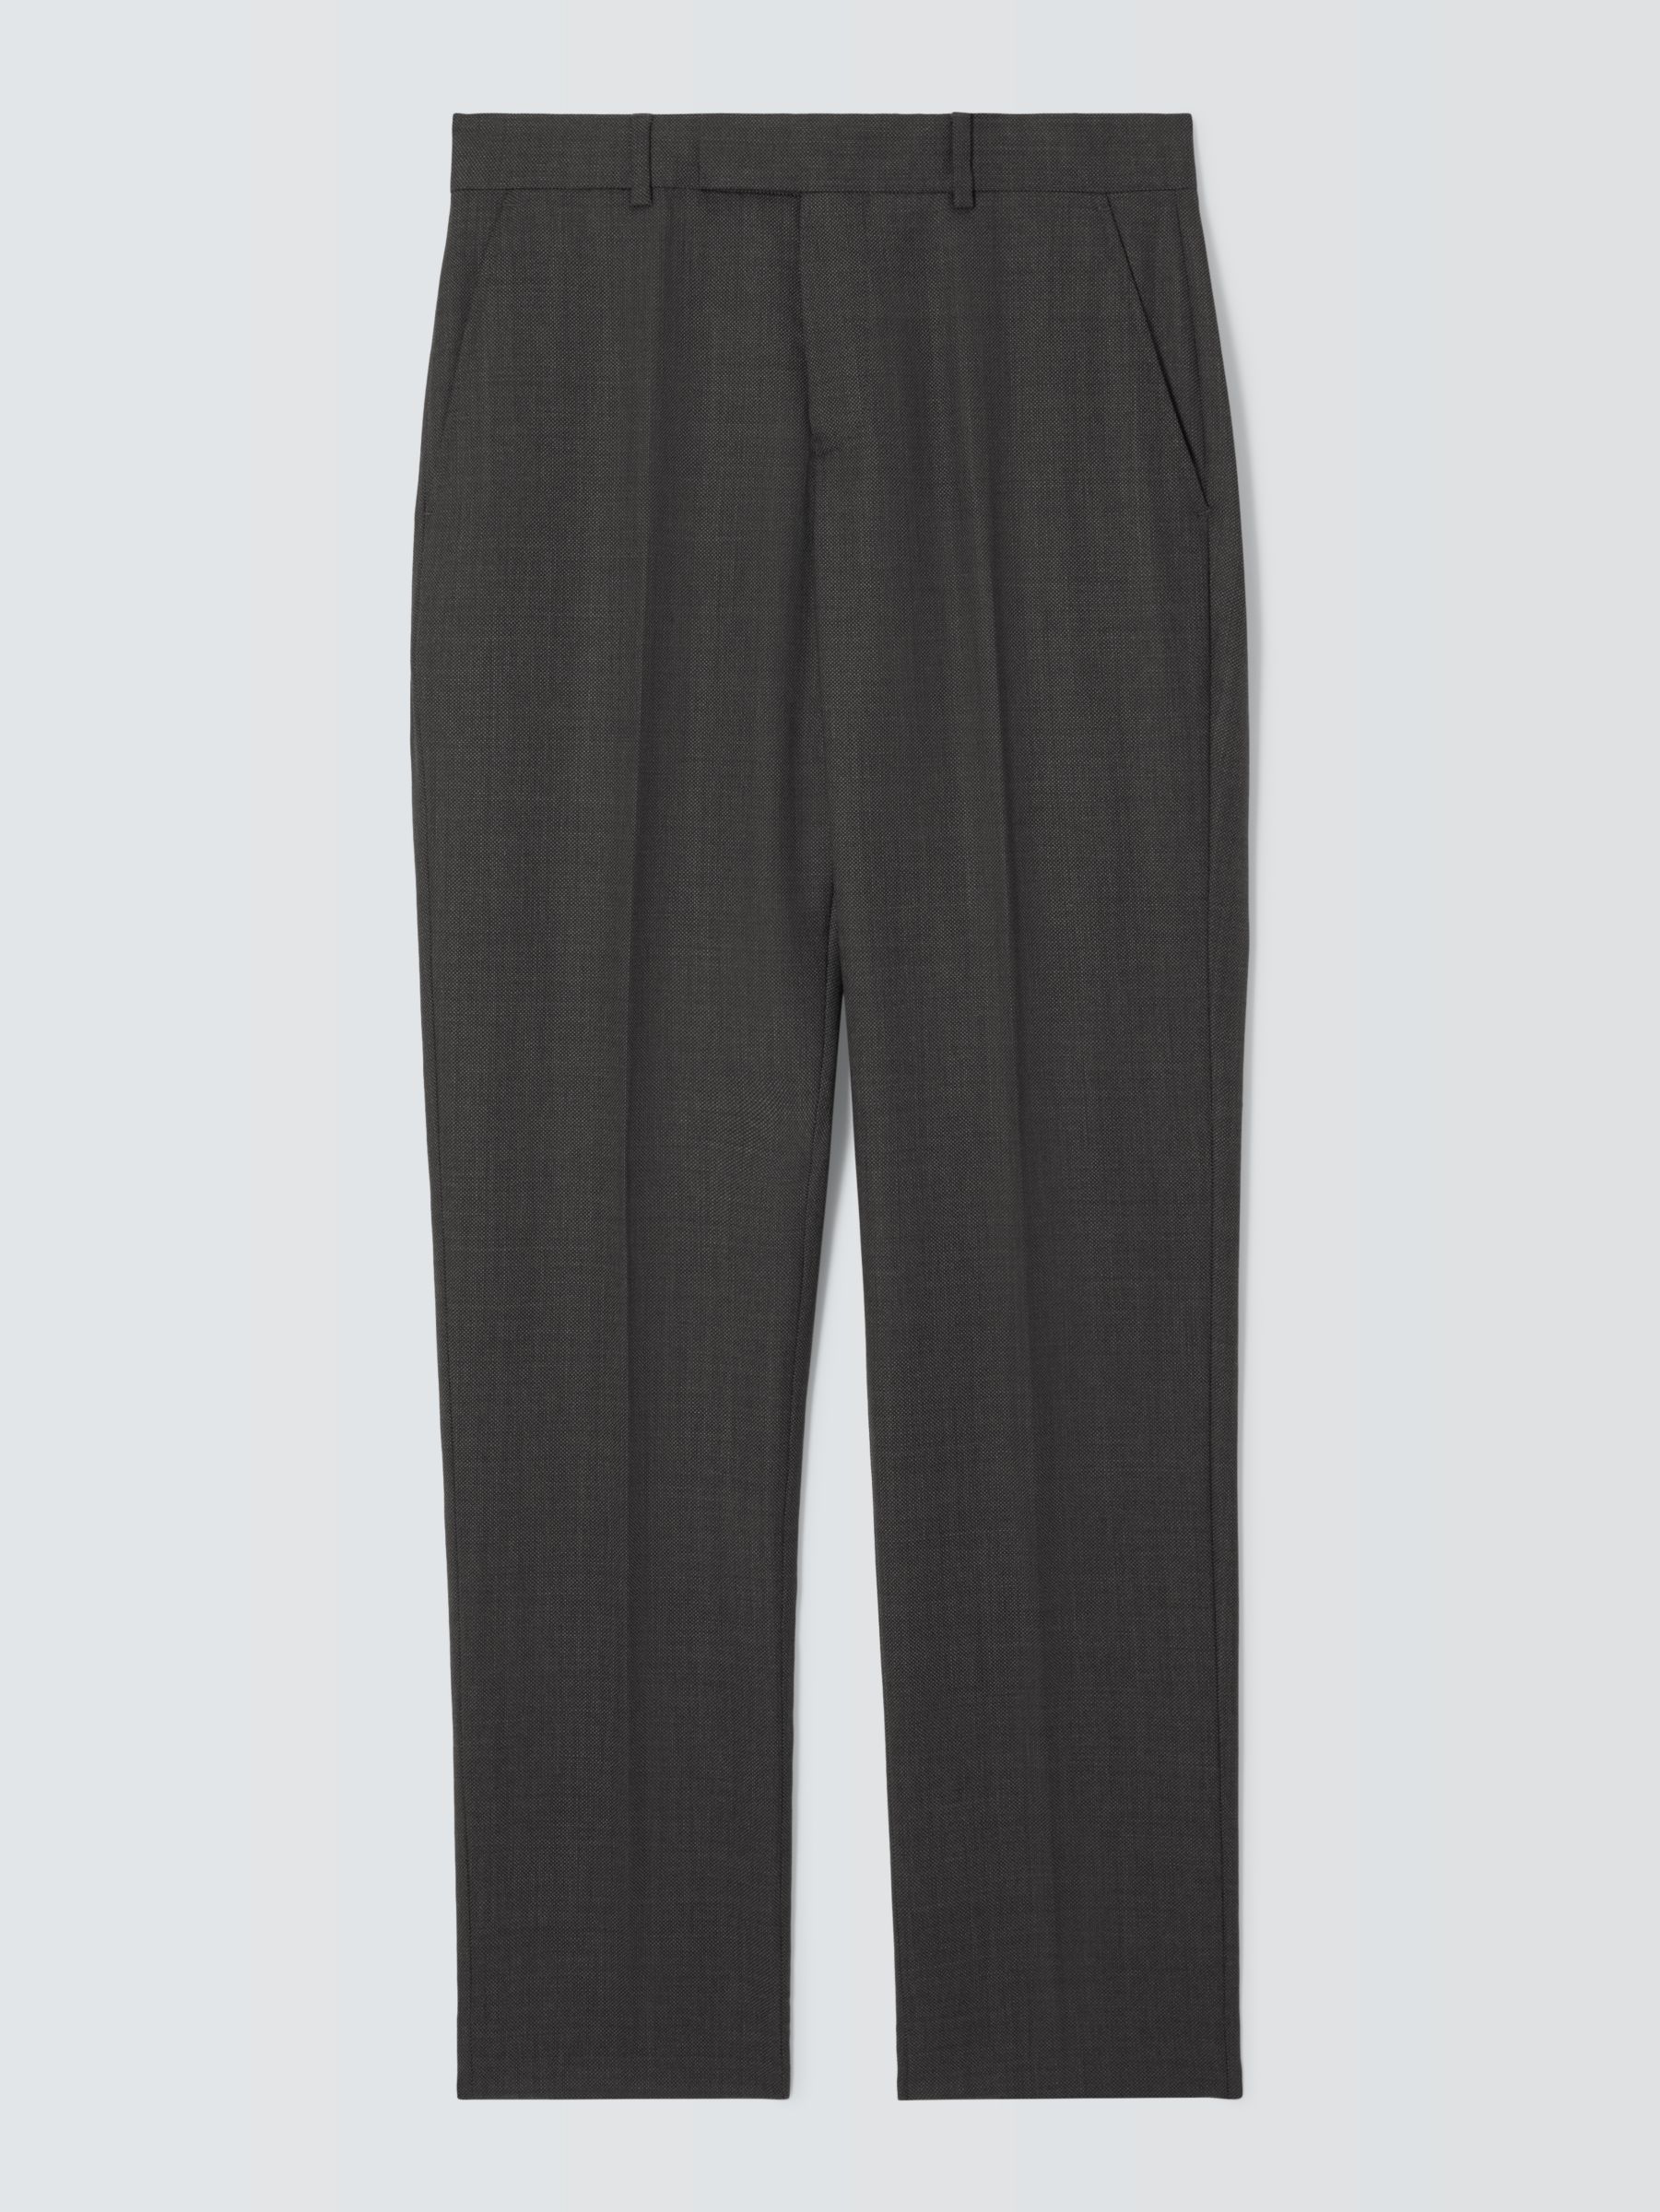 John Lewis Super 100's Birdseye Regular Suit Trousers, Charcoal, 44 R